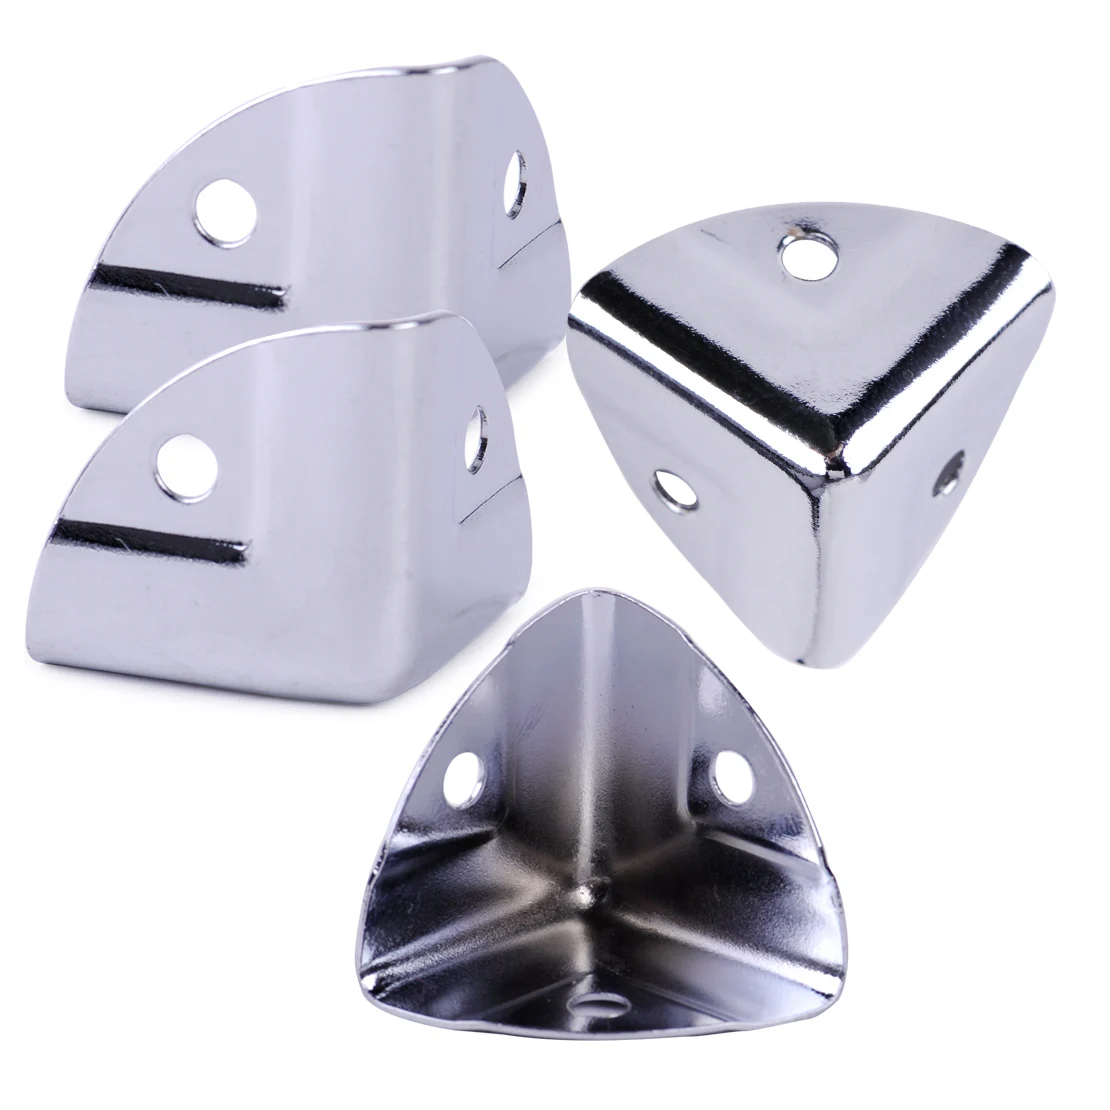 

8pcs/set Metal Corner Bracket Angle Brace Protectors for Wooden Trunk Box Chest Flightcase